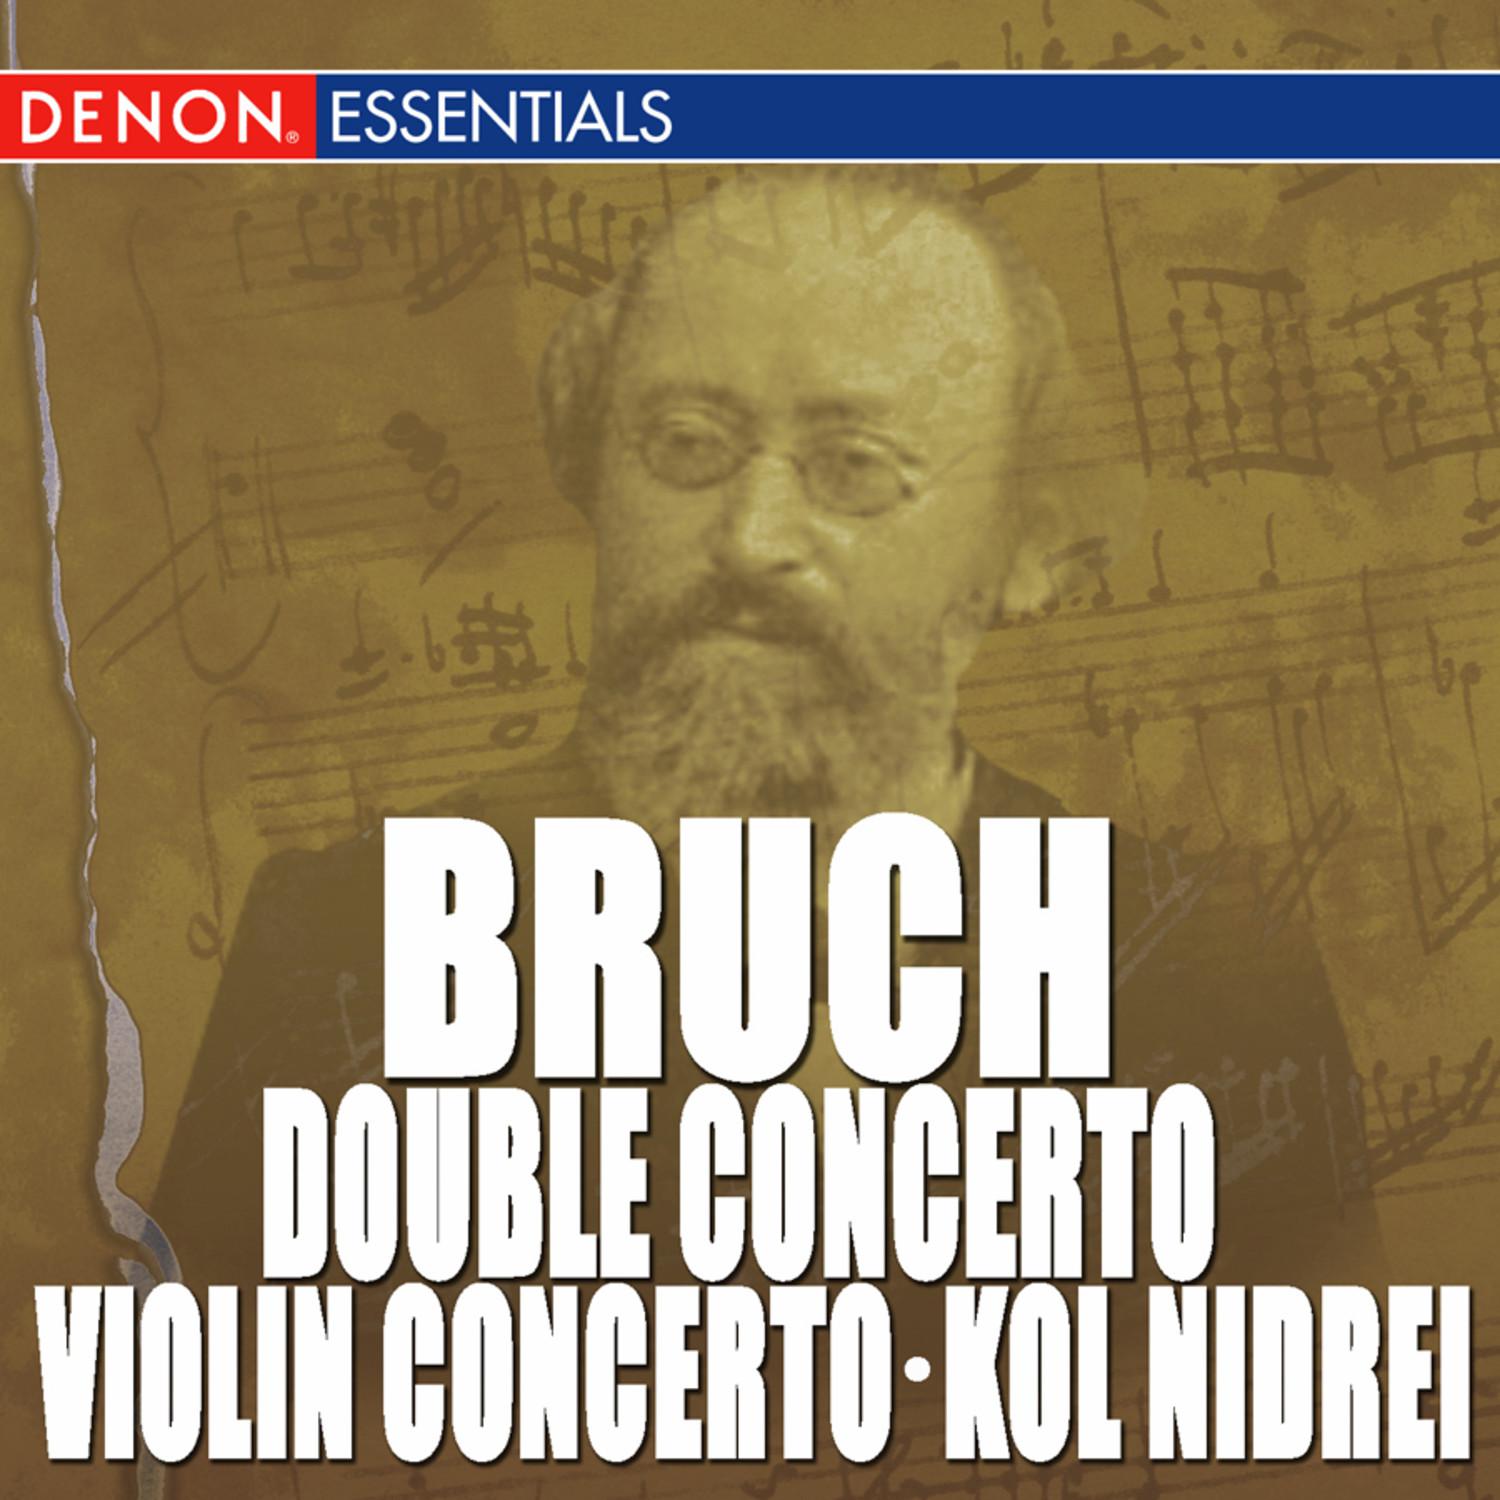 Concerto for Violin and Orchestra No. 1 in G Minor, Op. 26: III. Finale - Allegro energico